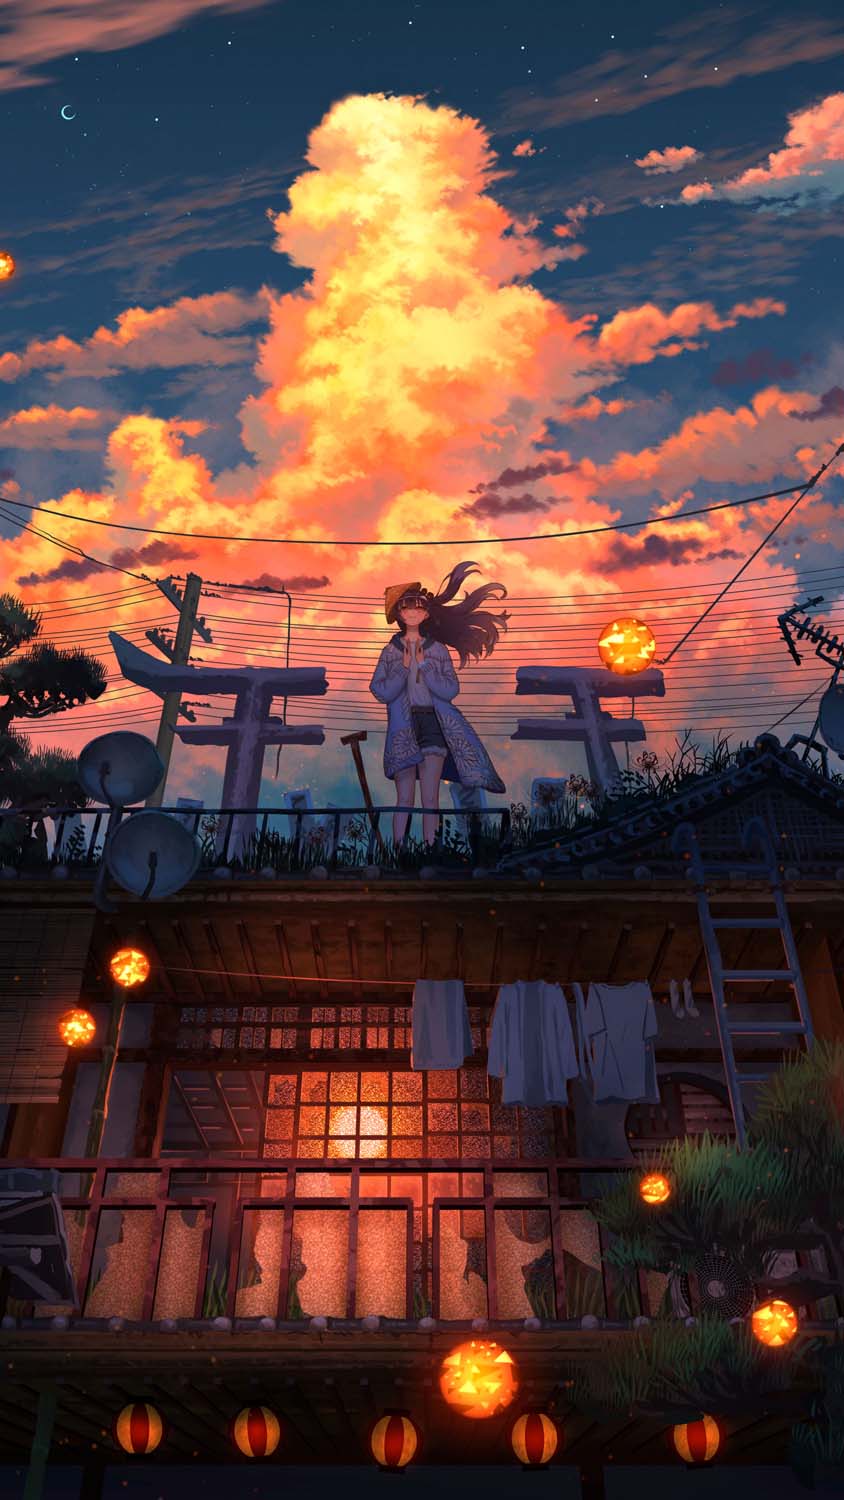 Anime Girl and Sky iPhone Wallpaper HD